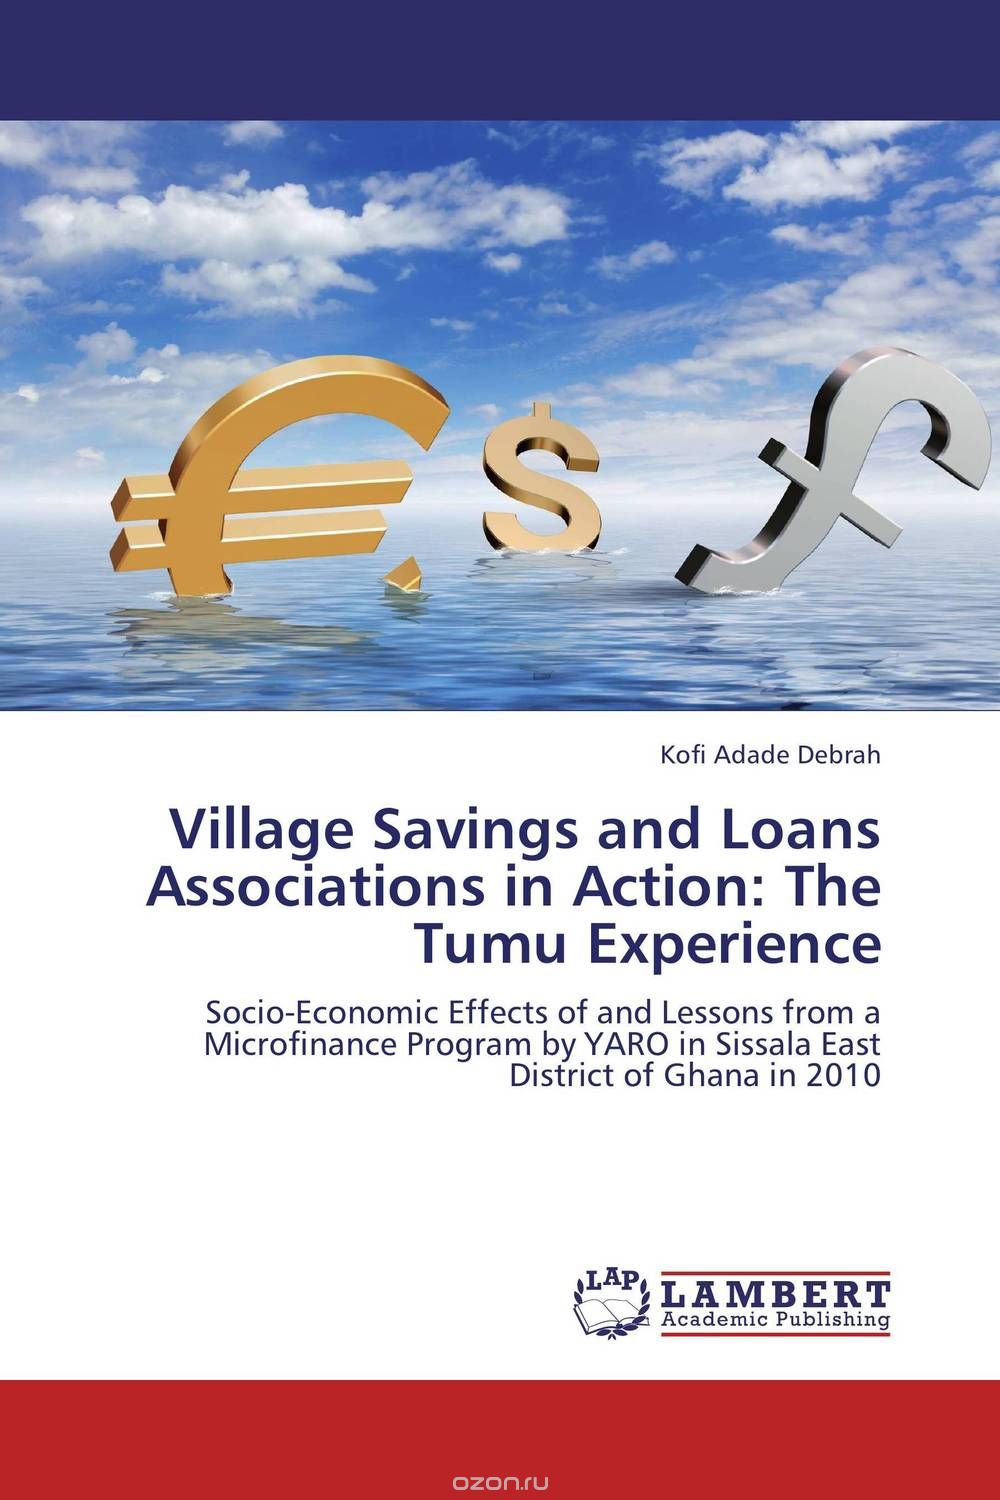 Скачать книгу "Village Savings and Loans Associations in Action:  The Tumu Experience"